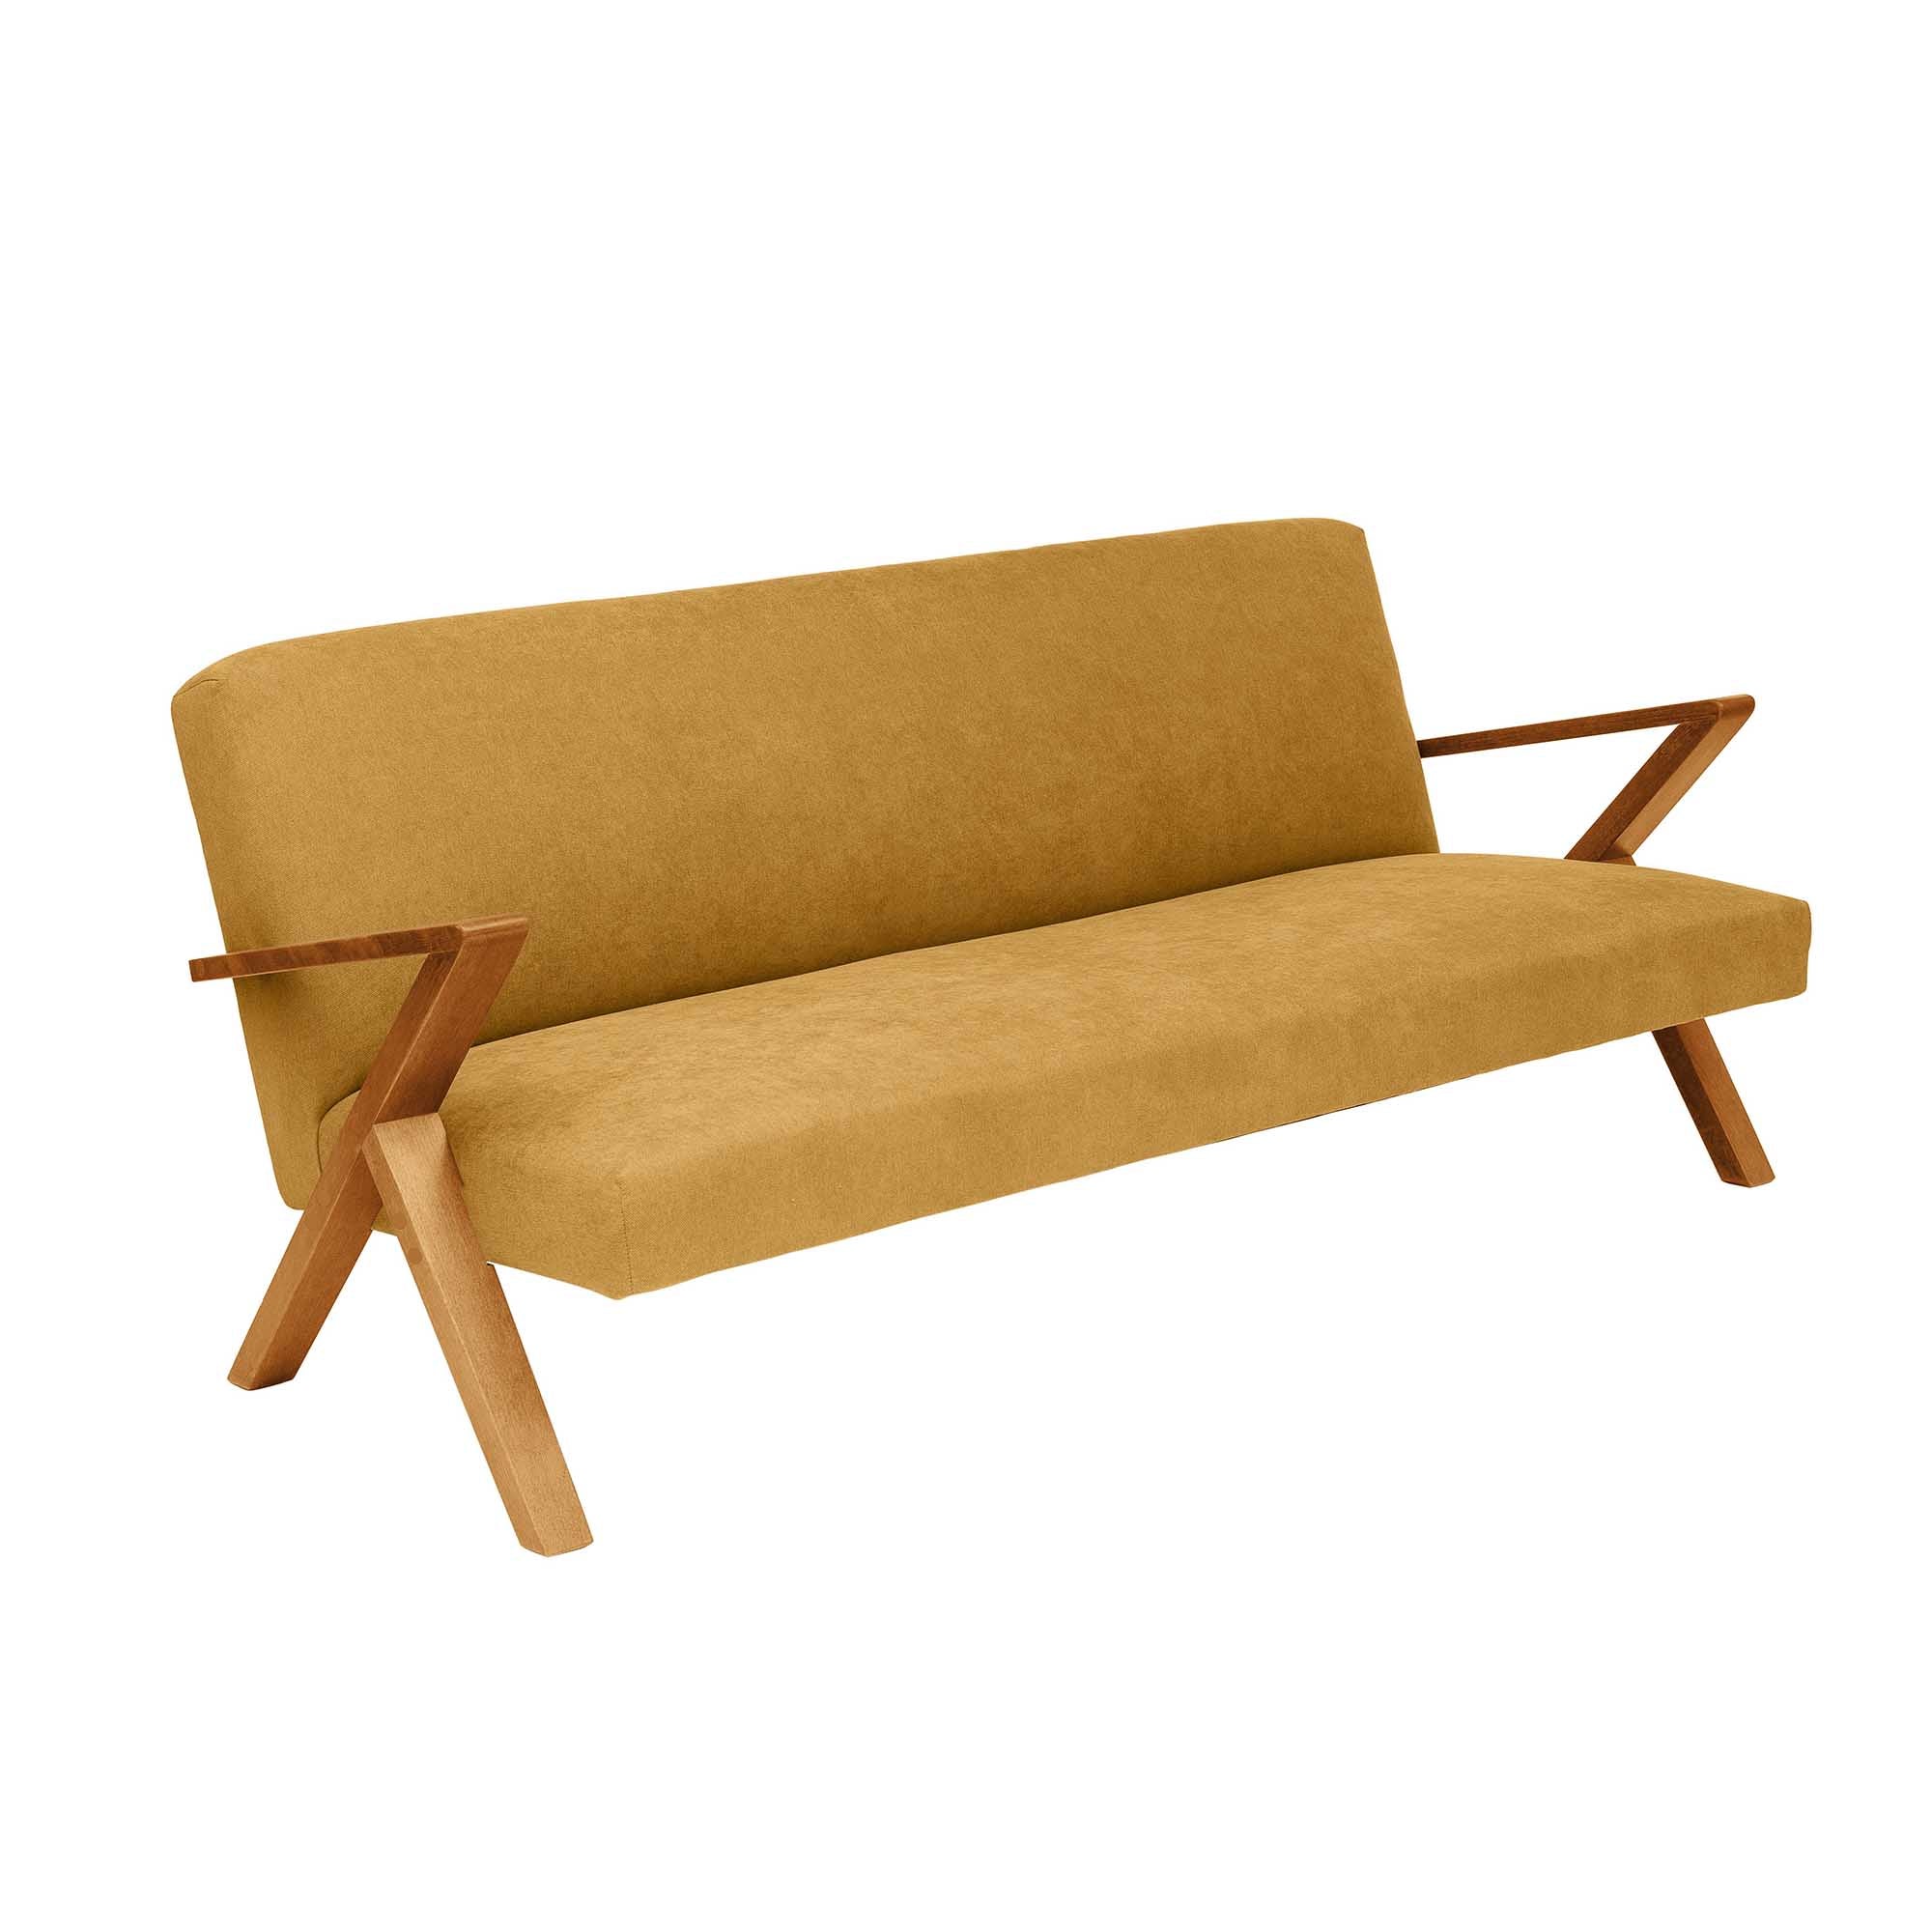 4-seater Sofa Beech Wood Frame, Oak Colour yellow fabric, half-side view